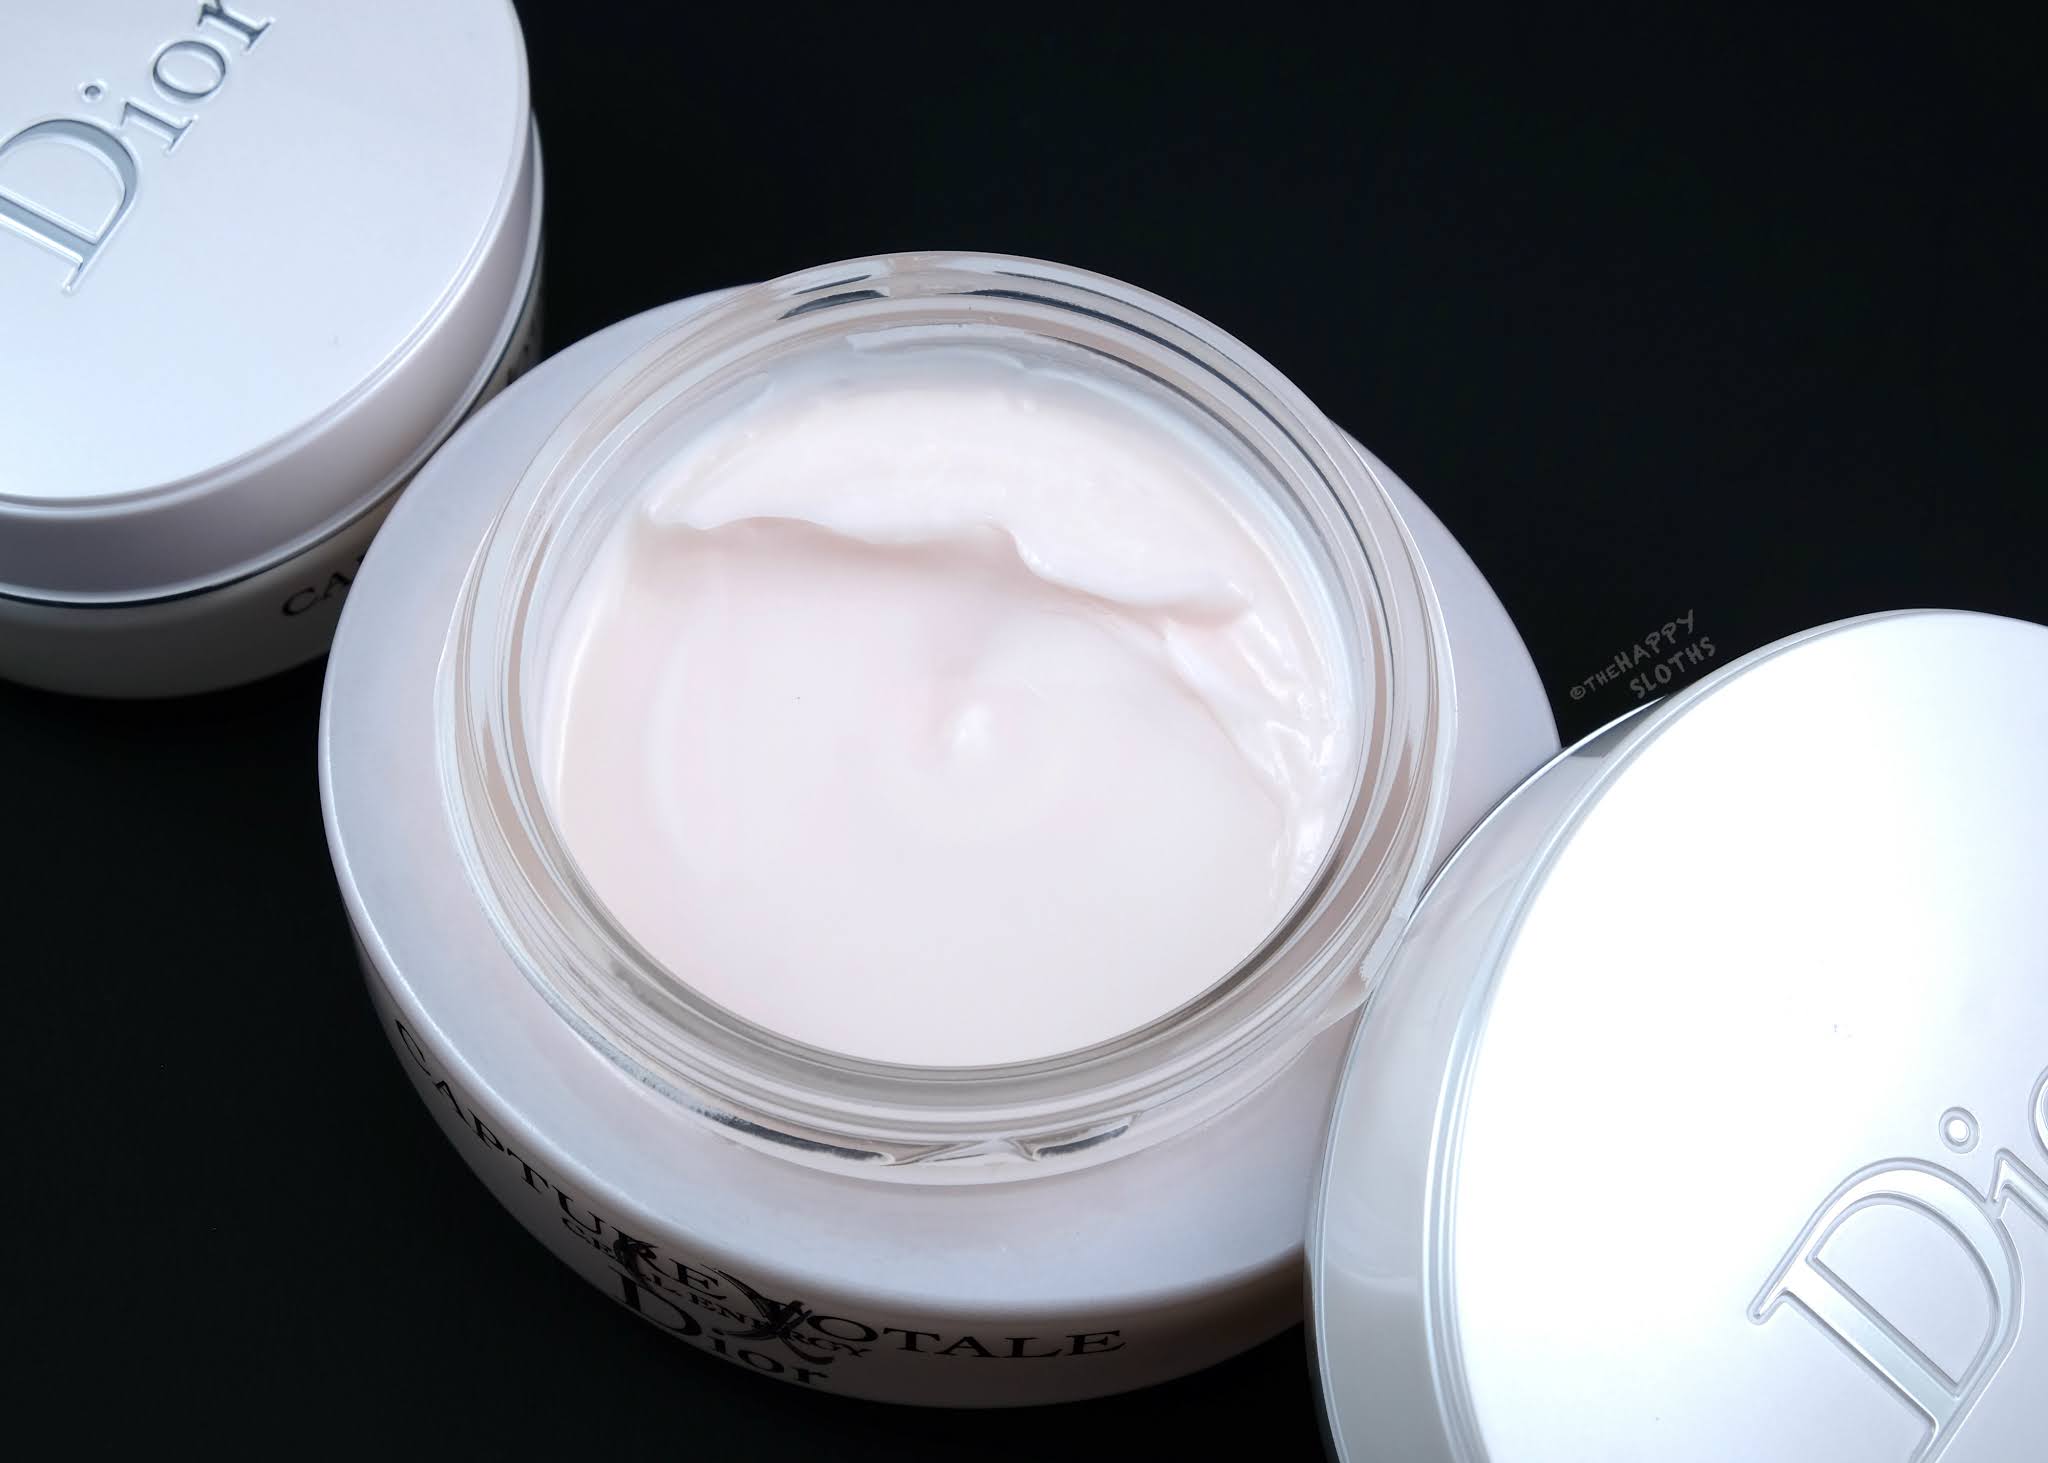 dior anti aging cream review